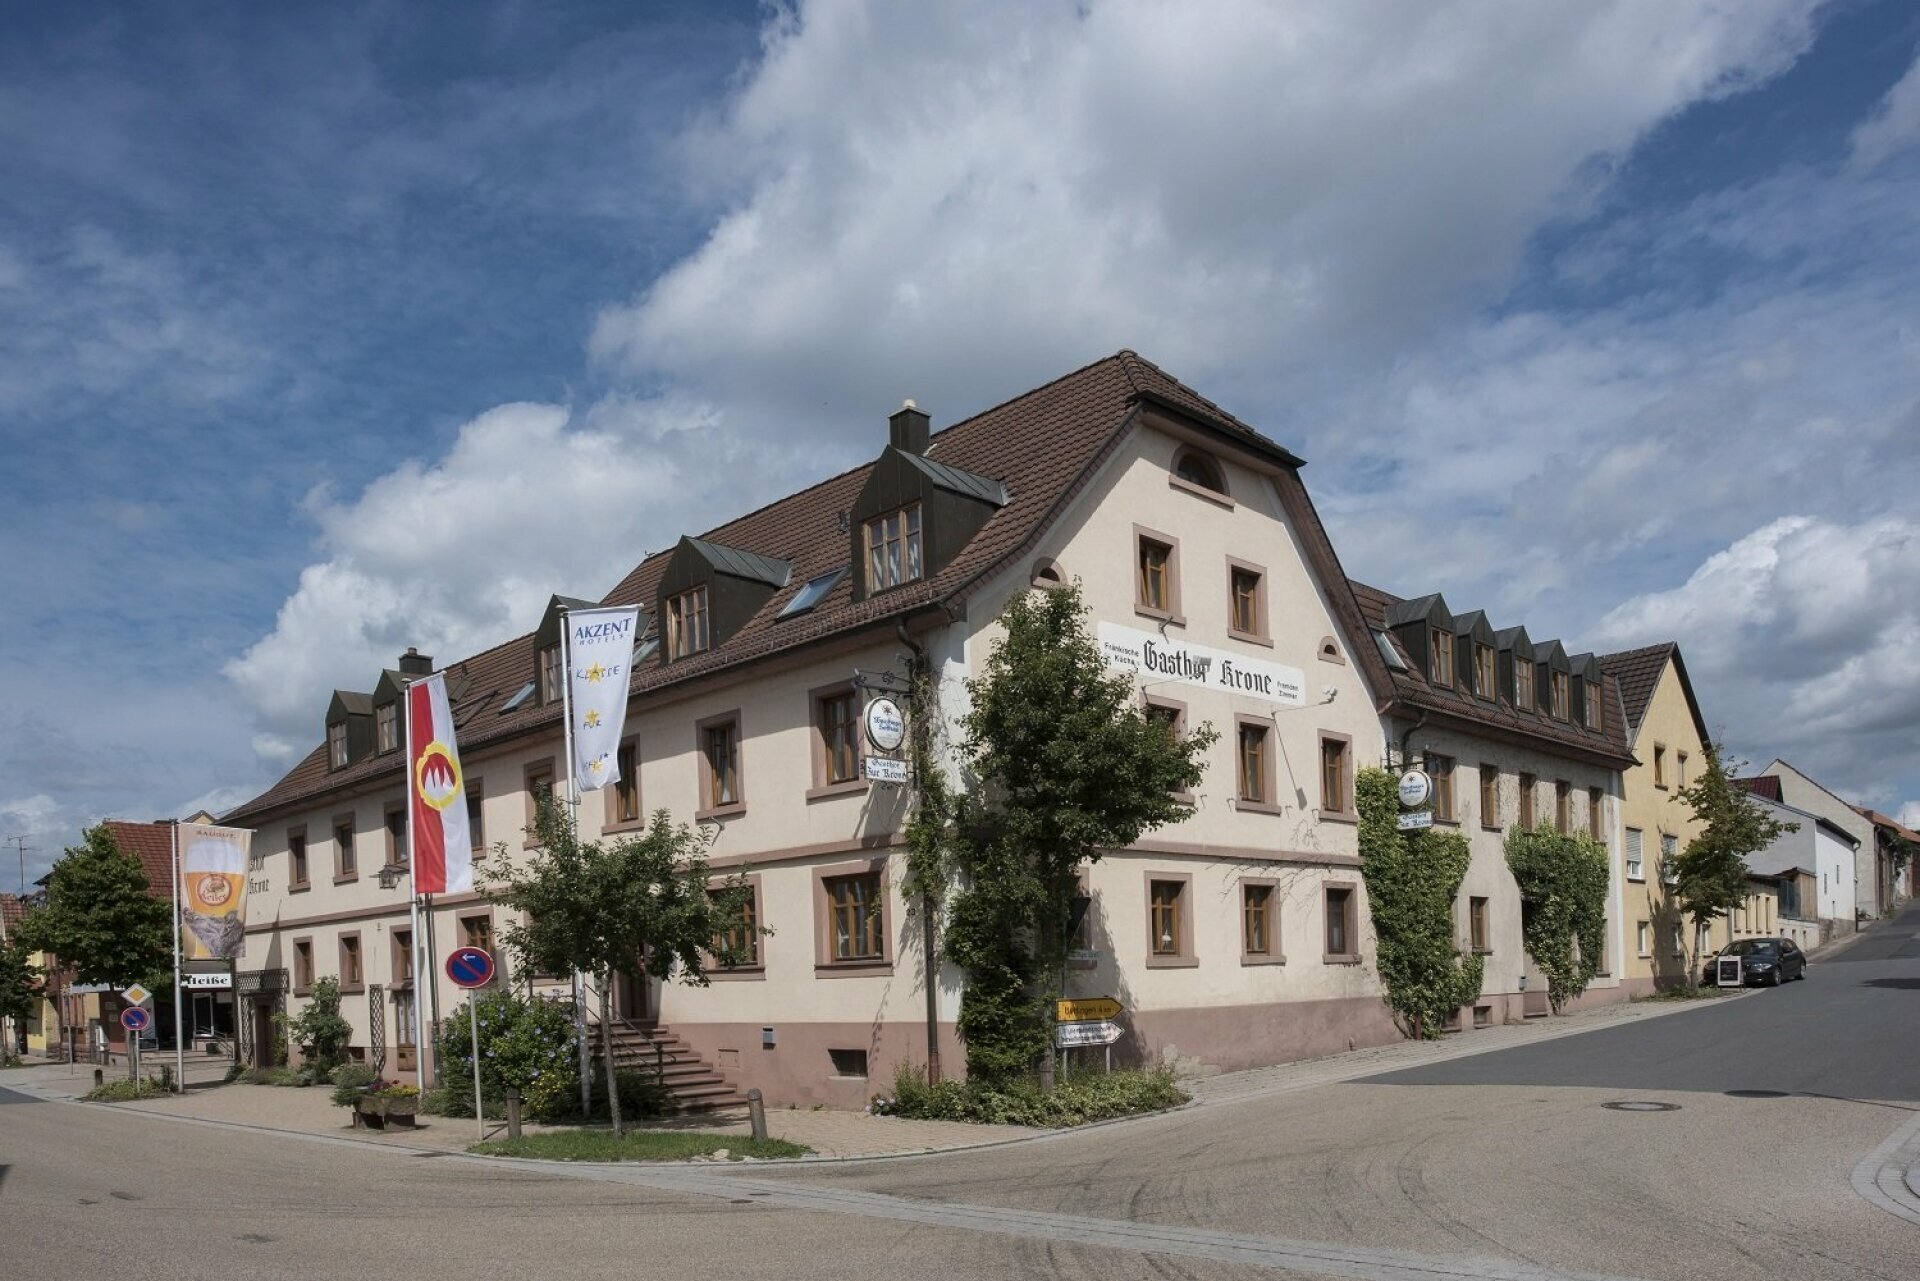 Main-Flußfahrt in Würzburg - AKZENT Hotel Krone